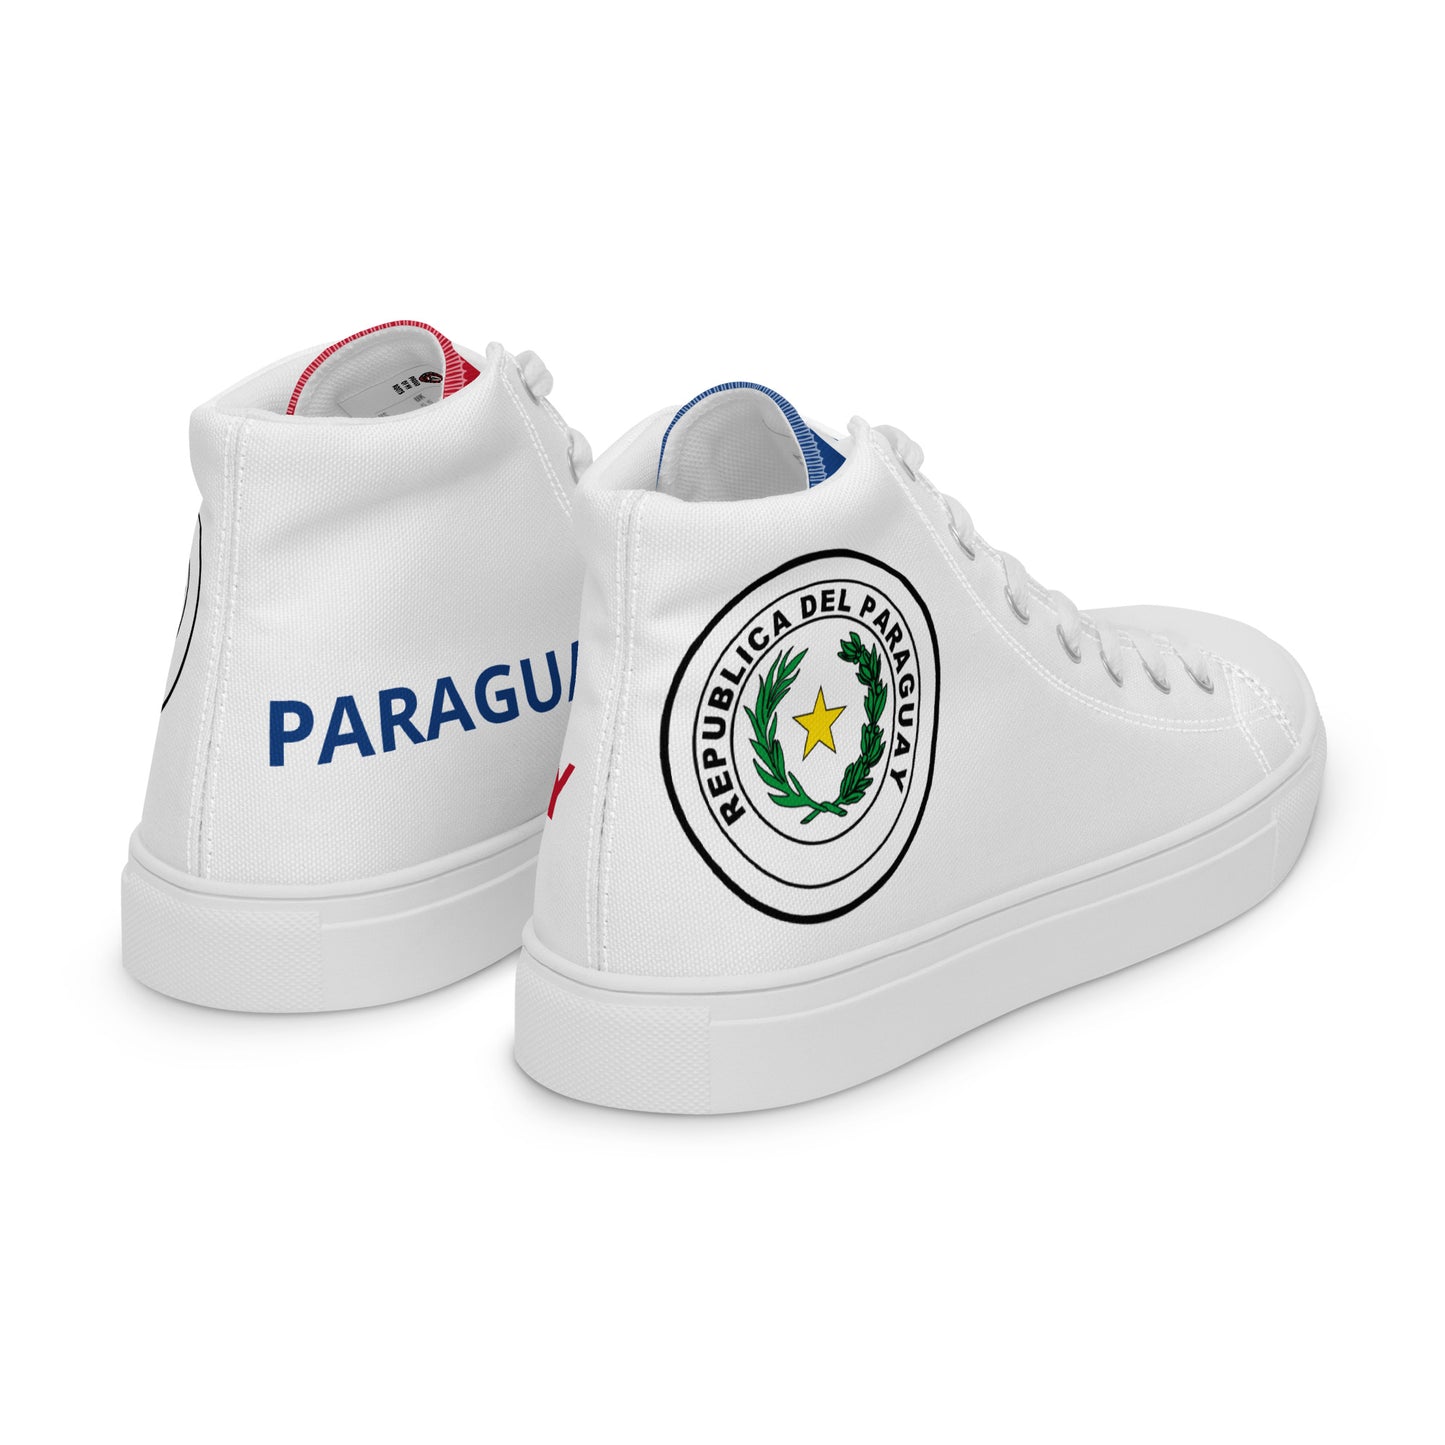 Paraguay - Men - White - High top shoes